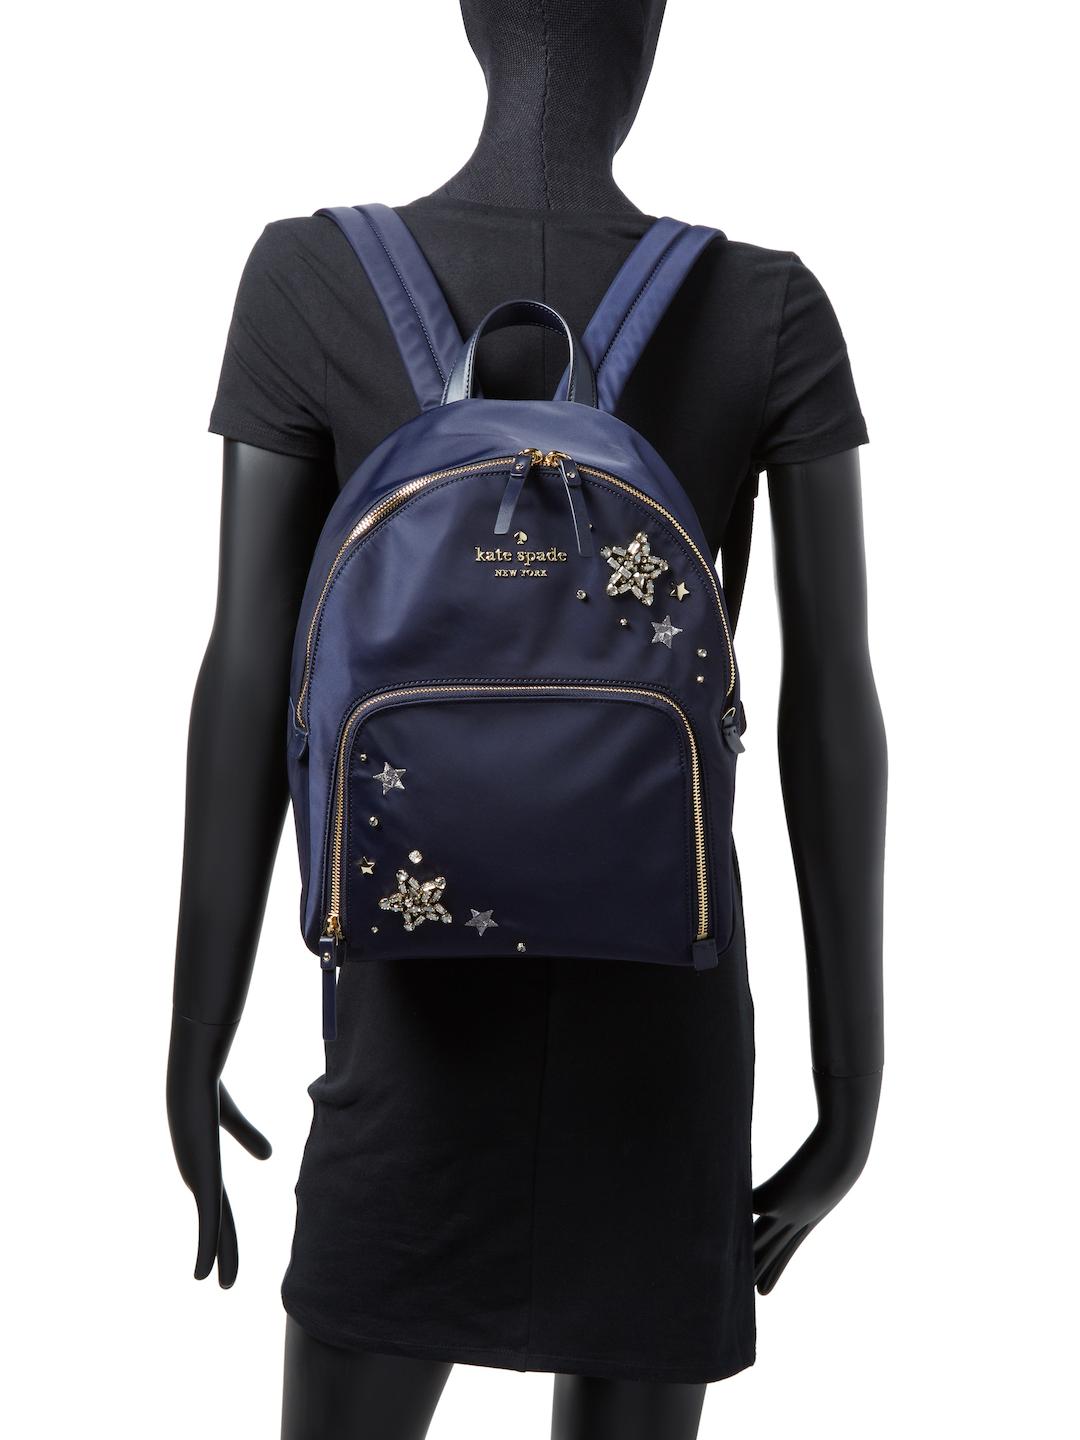 Kate Spade Watson Lane Embellished Backpack in Blue - Lyst